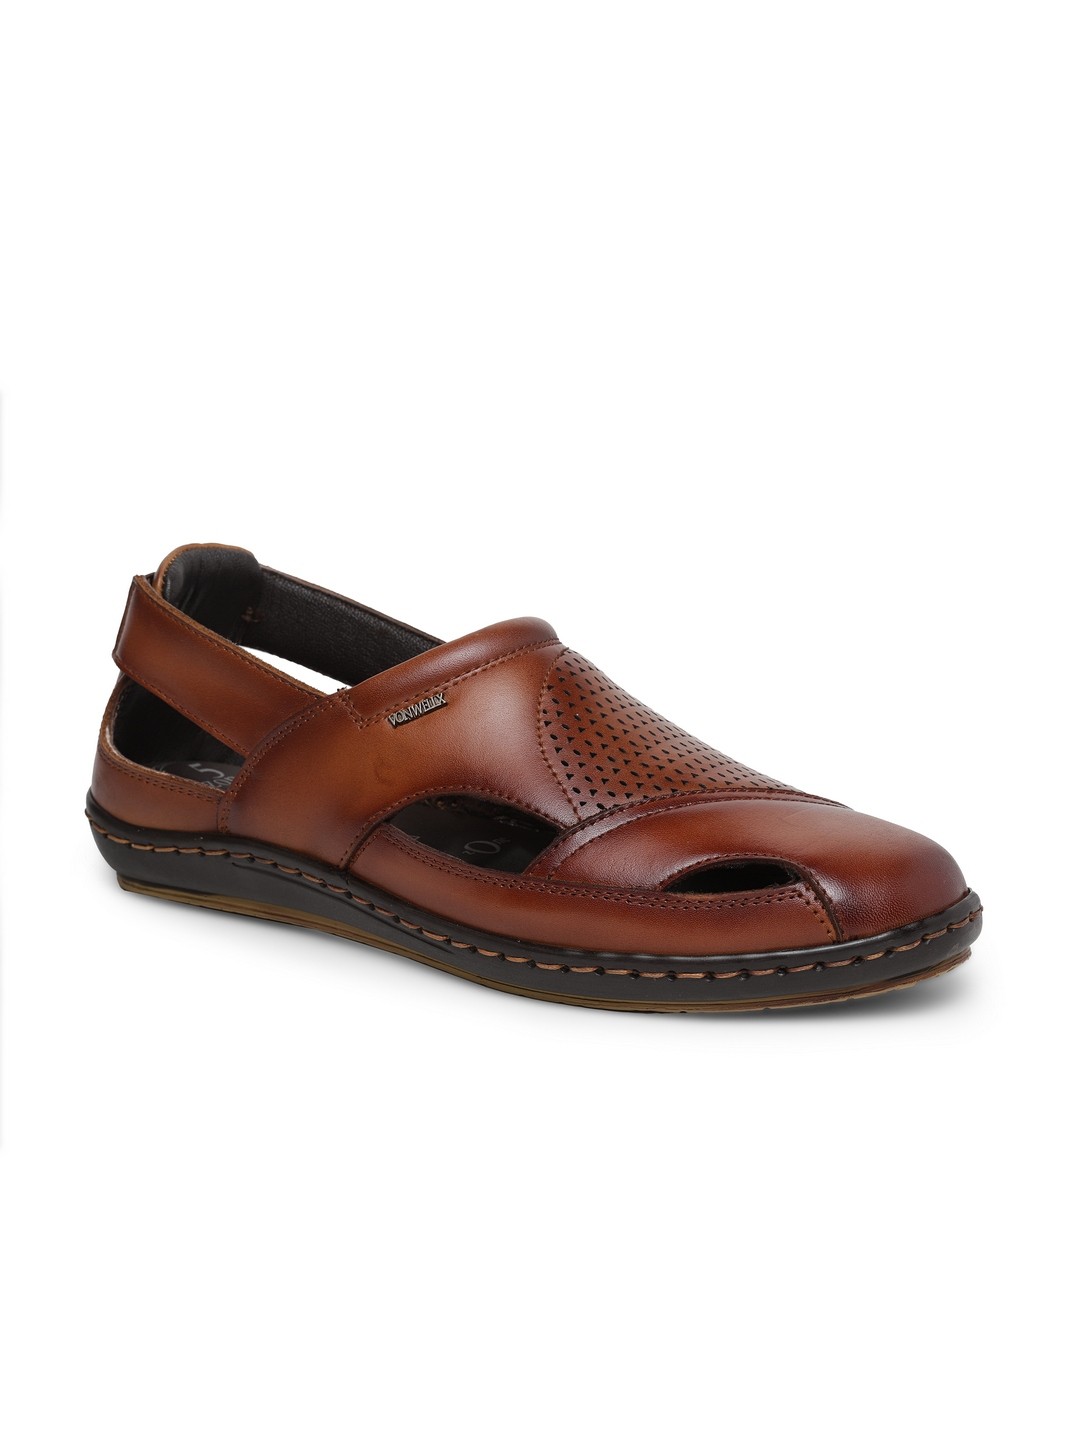 Buy Von Wellx Germany Comfort Men's Tan Sandal Eddie Online in Salalah